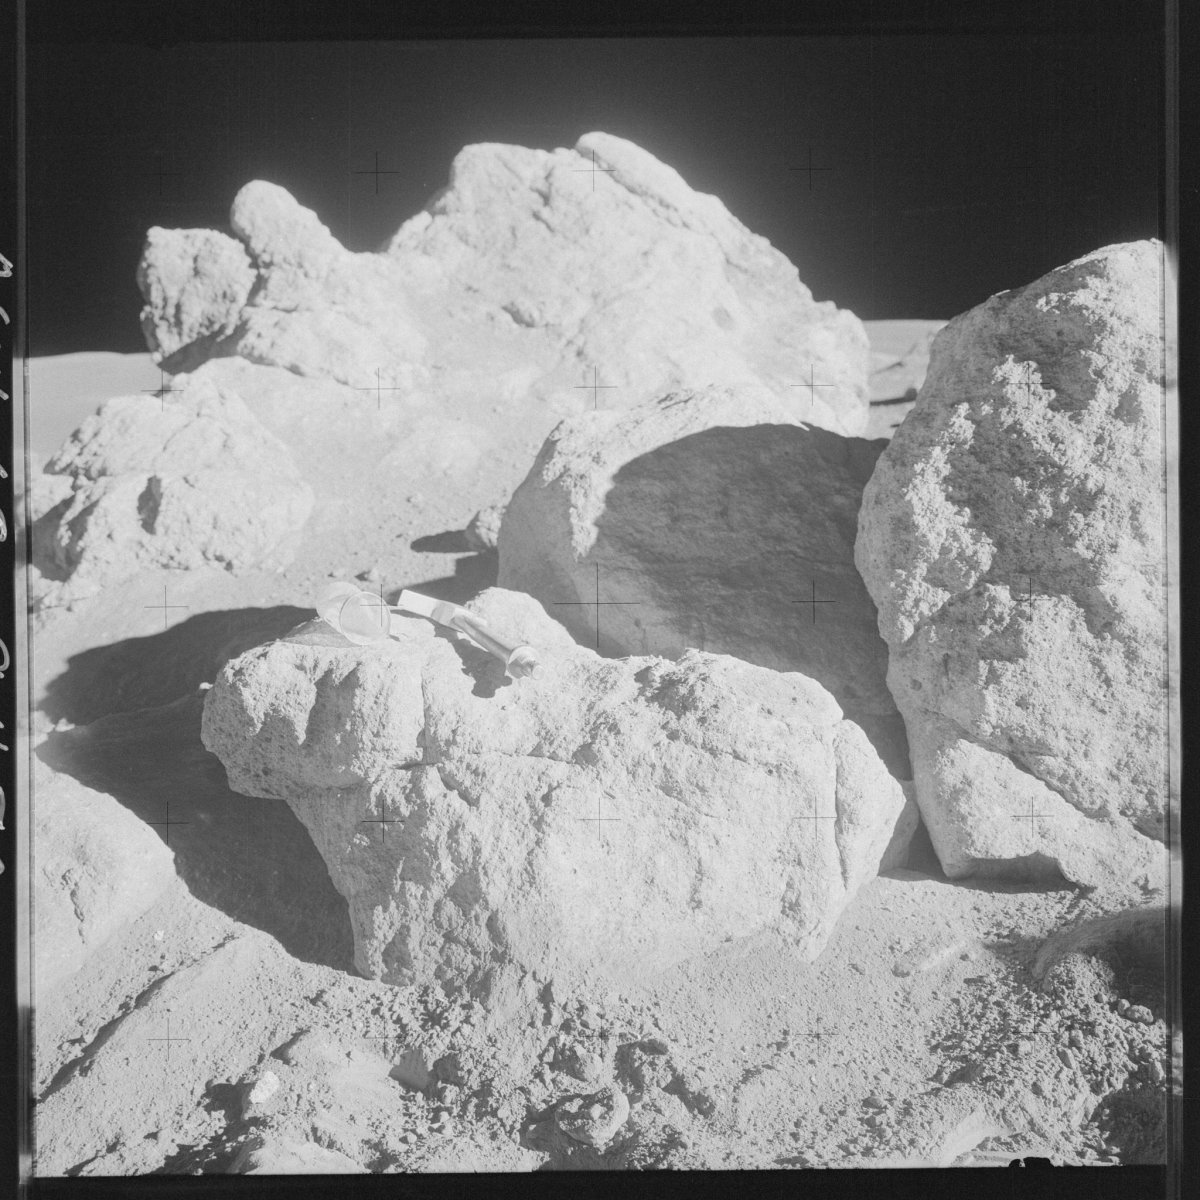 7 - Rocks on the moon